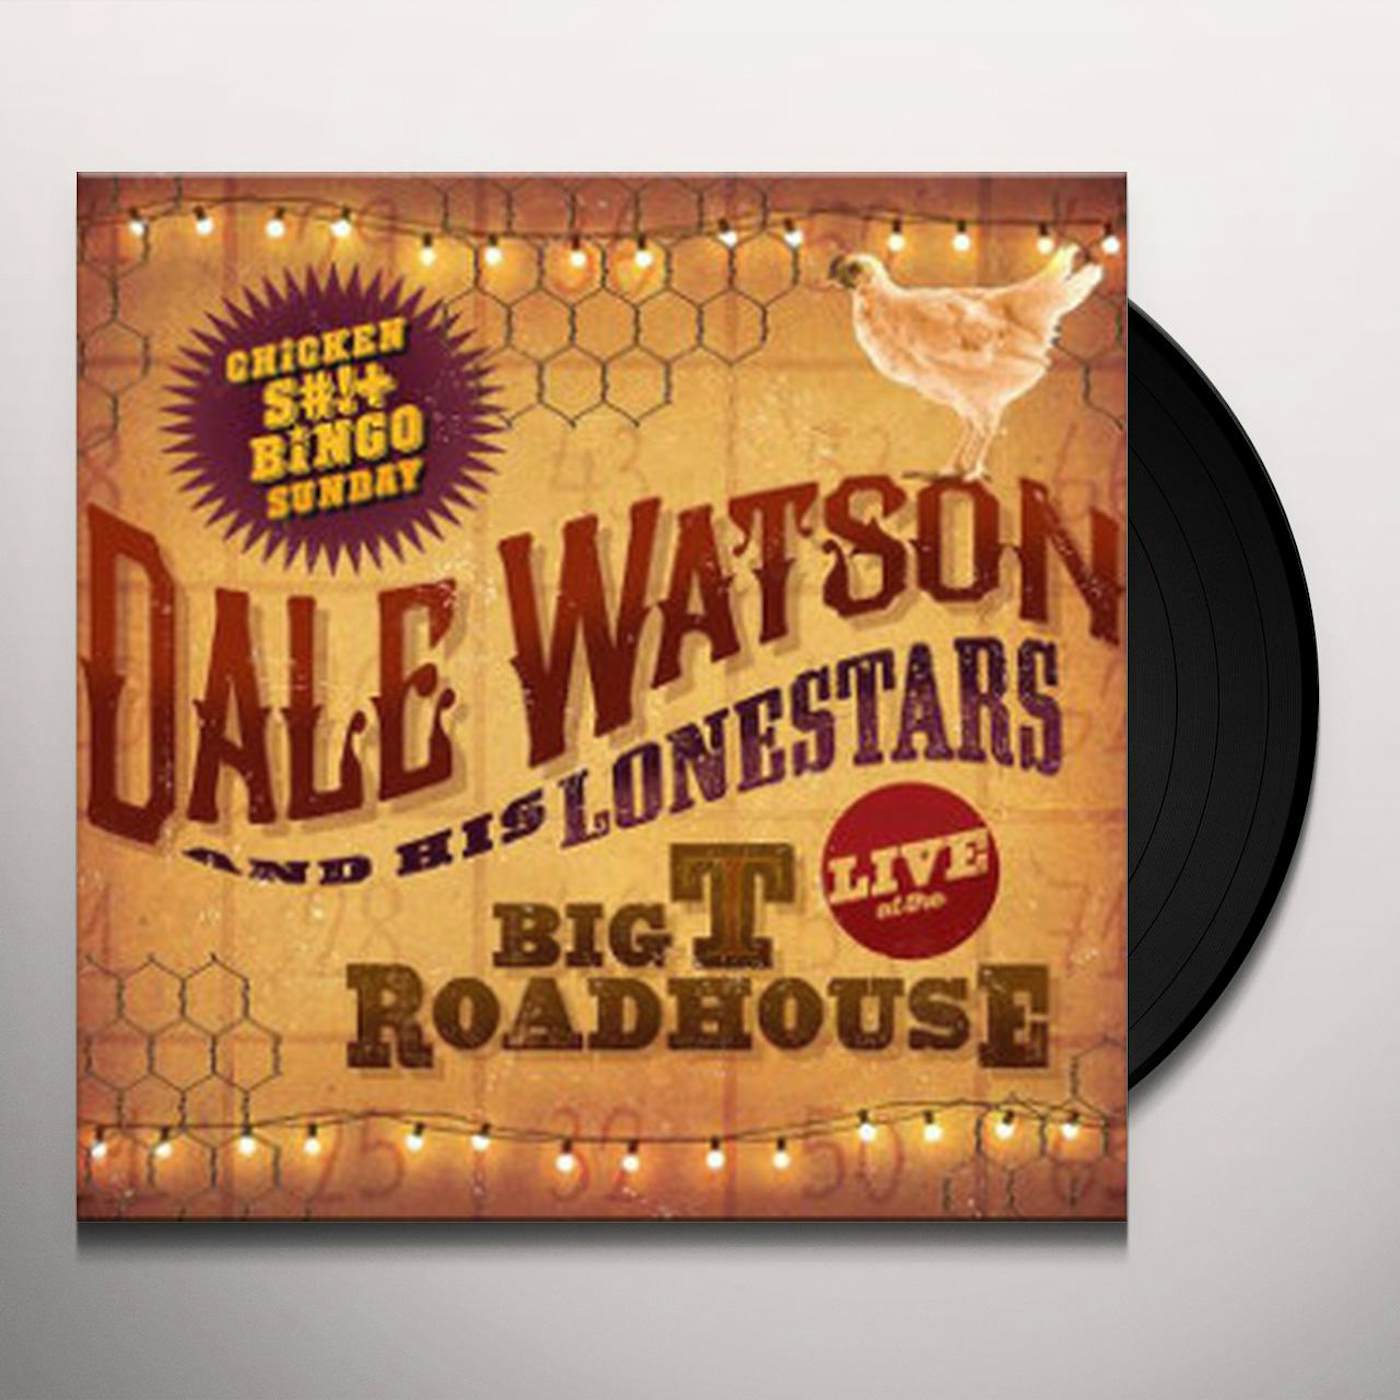 Dale Watson Live At The Big T Roadhouse -Chicken Shit Bingo Vinyl Record